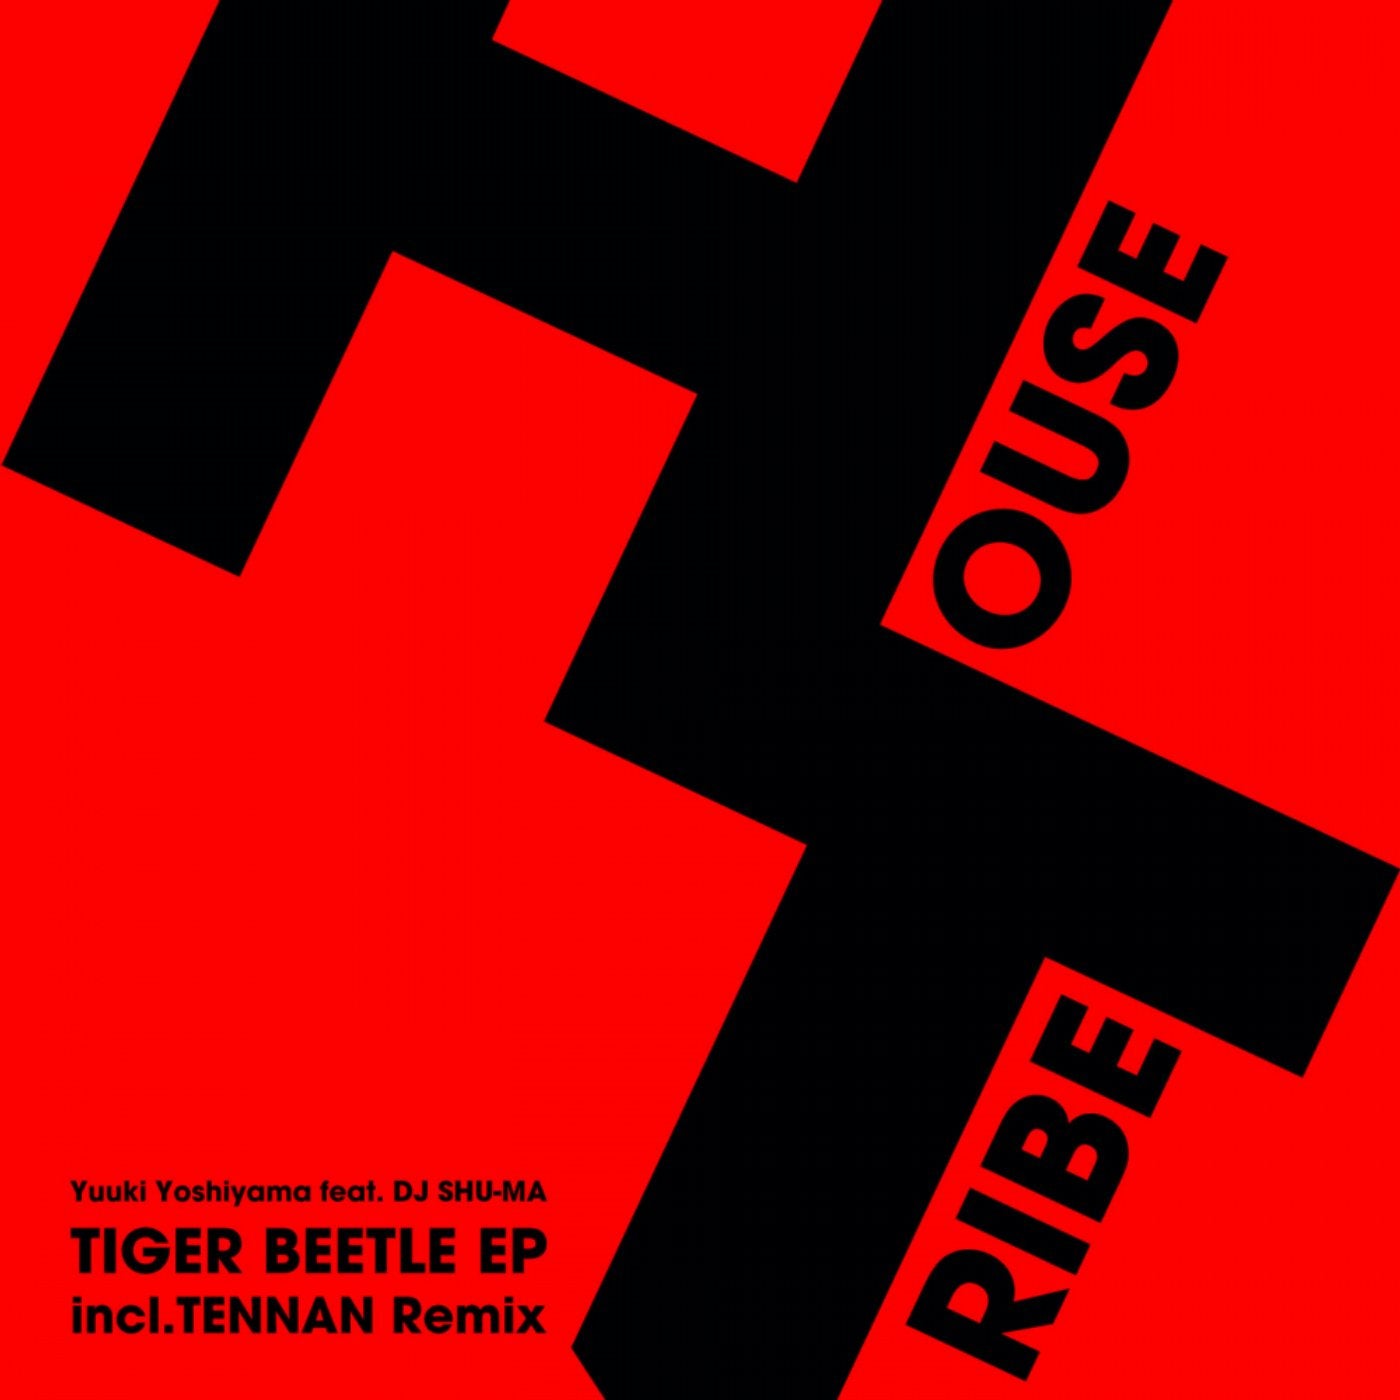 Tiger Beetle EP